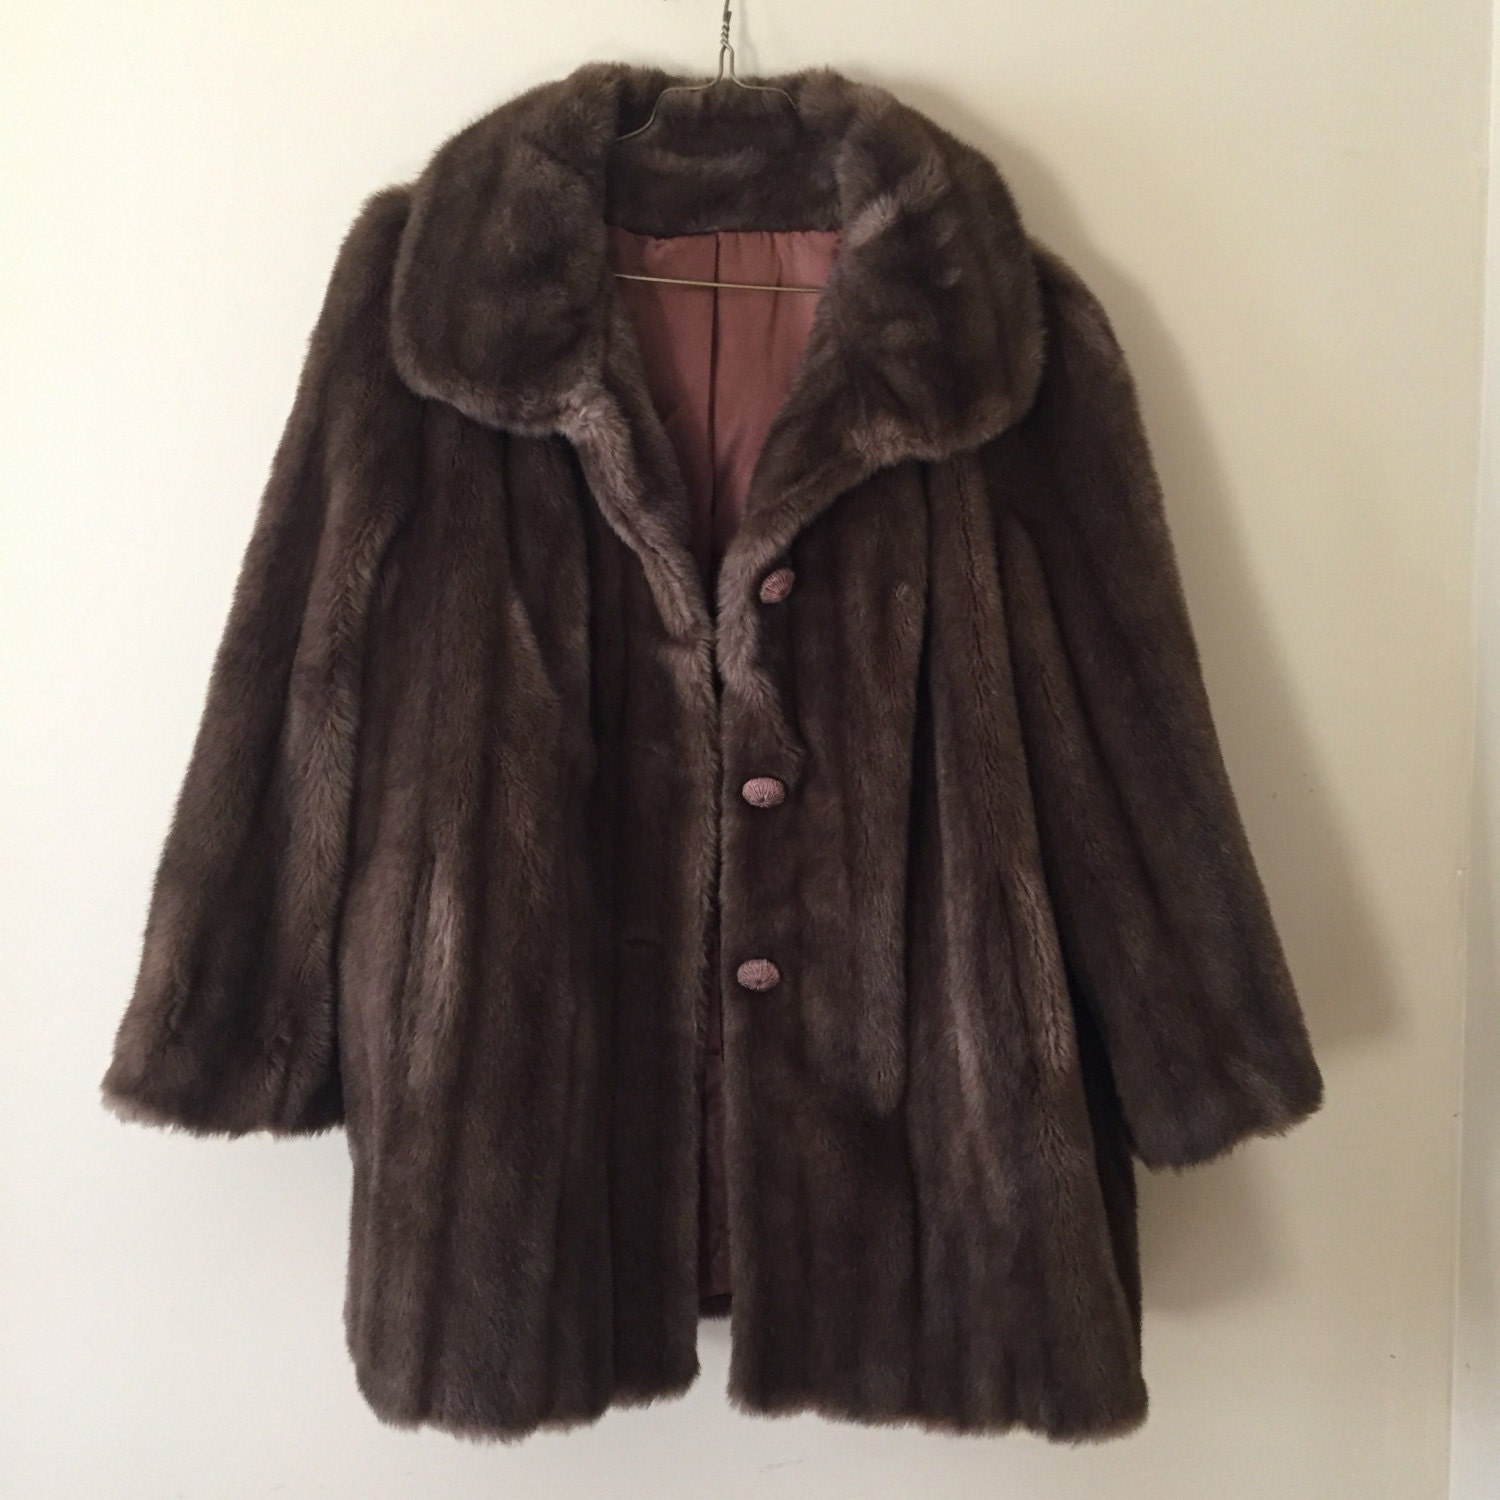 Vintage 1970s TISSAVEL Faux Fur Brown Coat